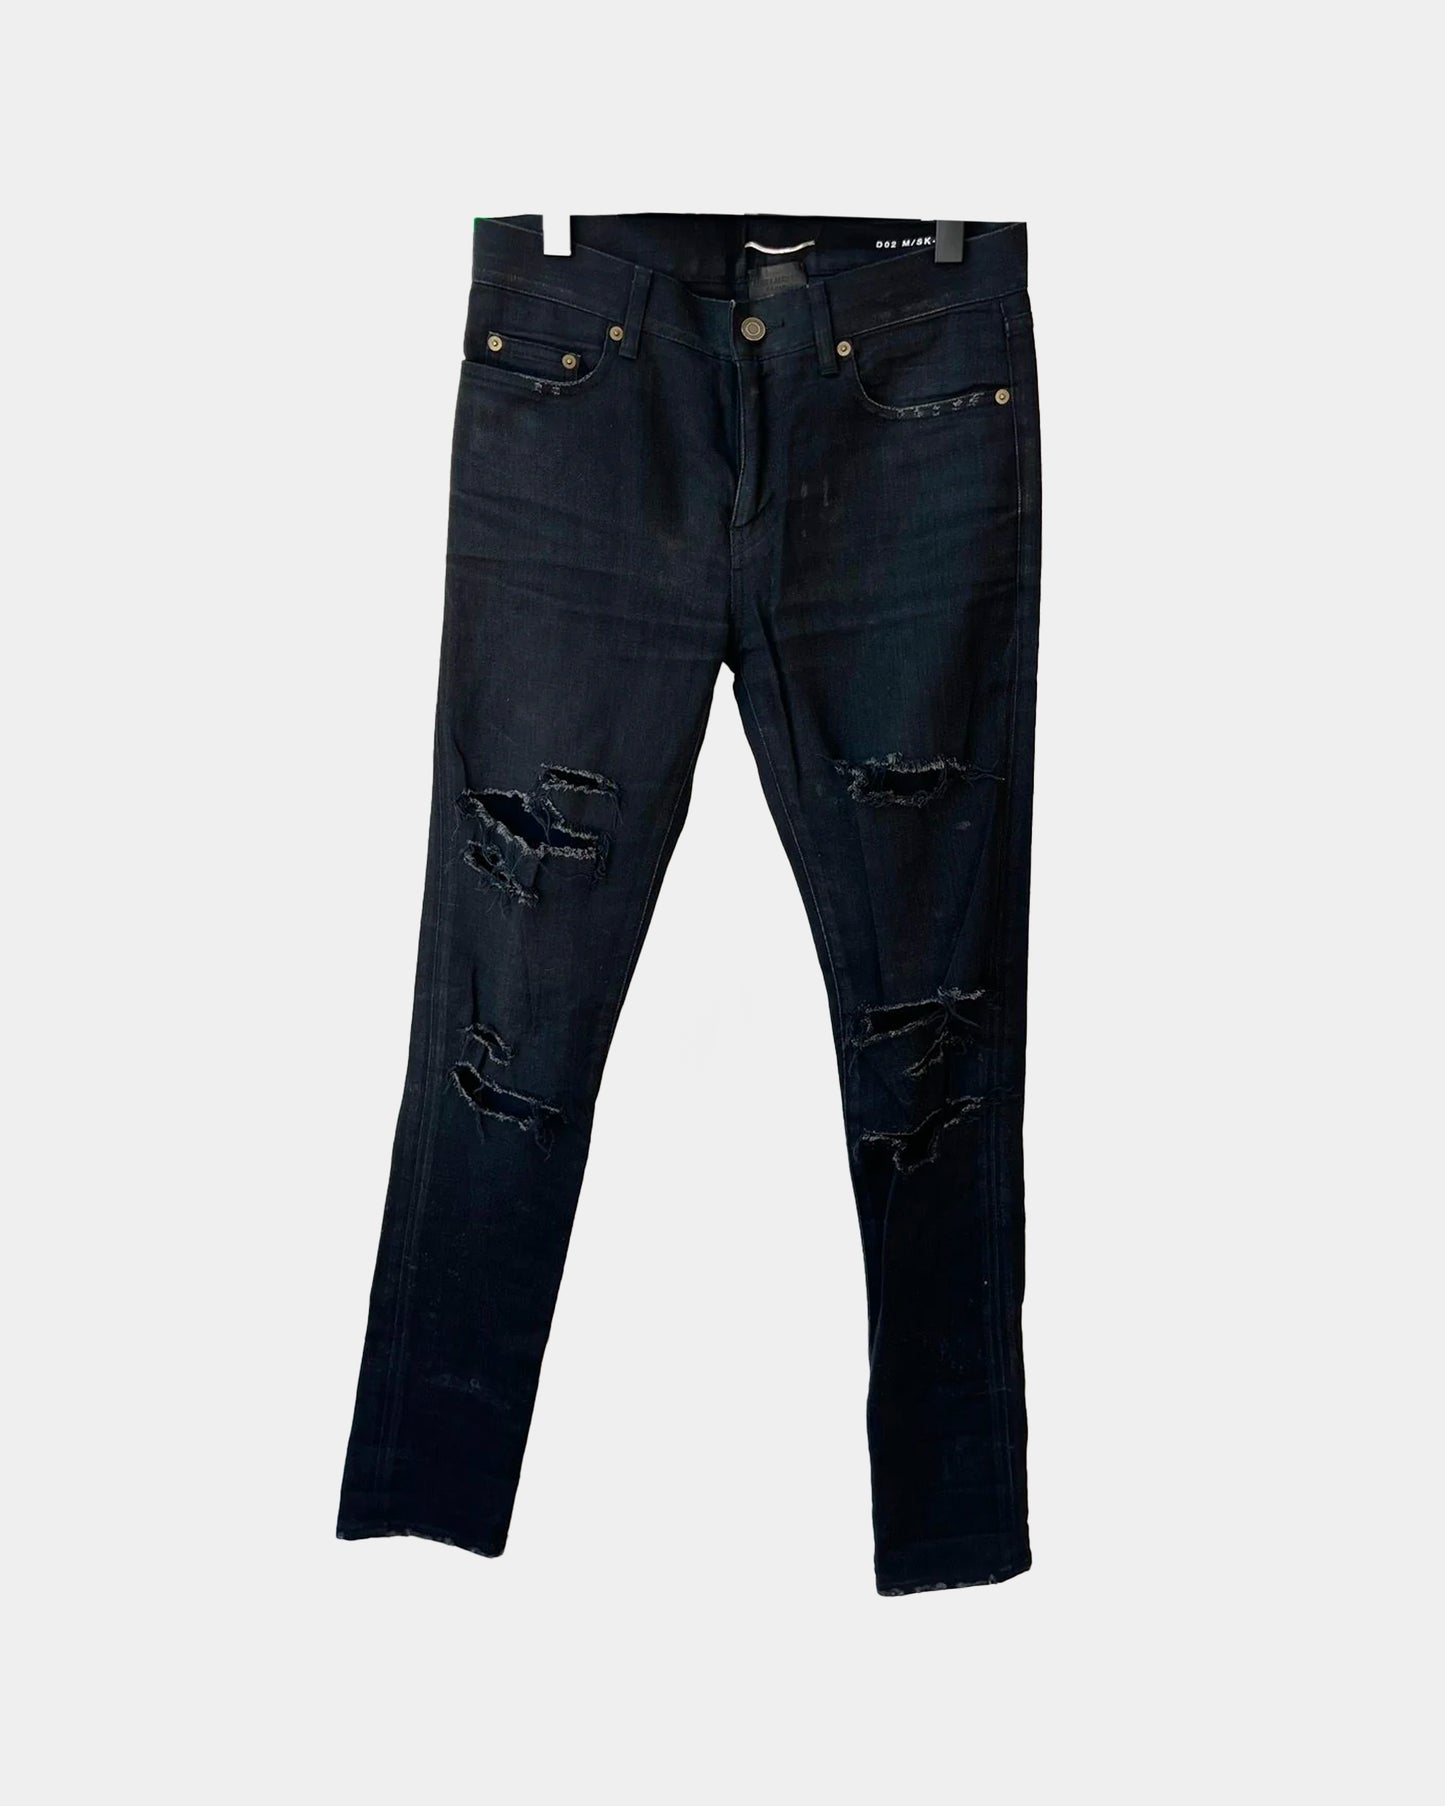 SLP FW15 D02 Black Skinny Distressed Jeans *UNALTERED*